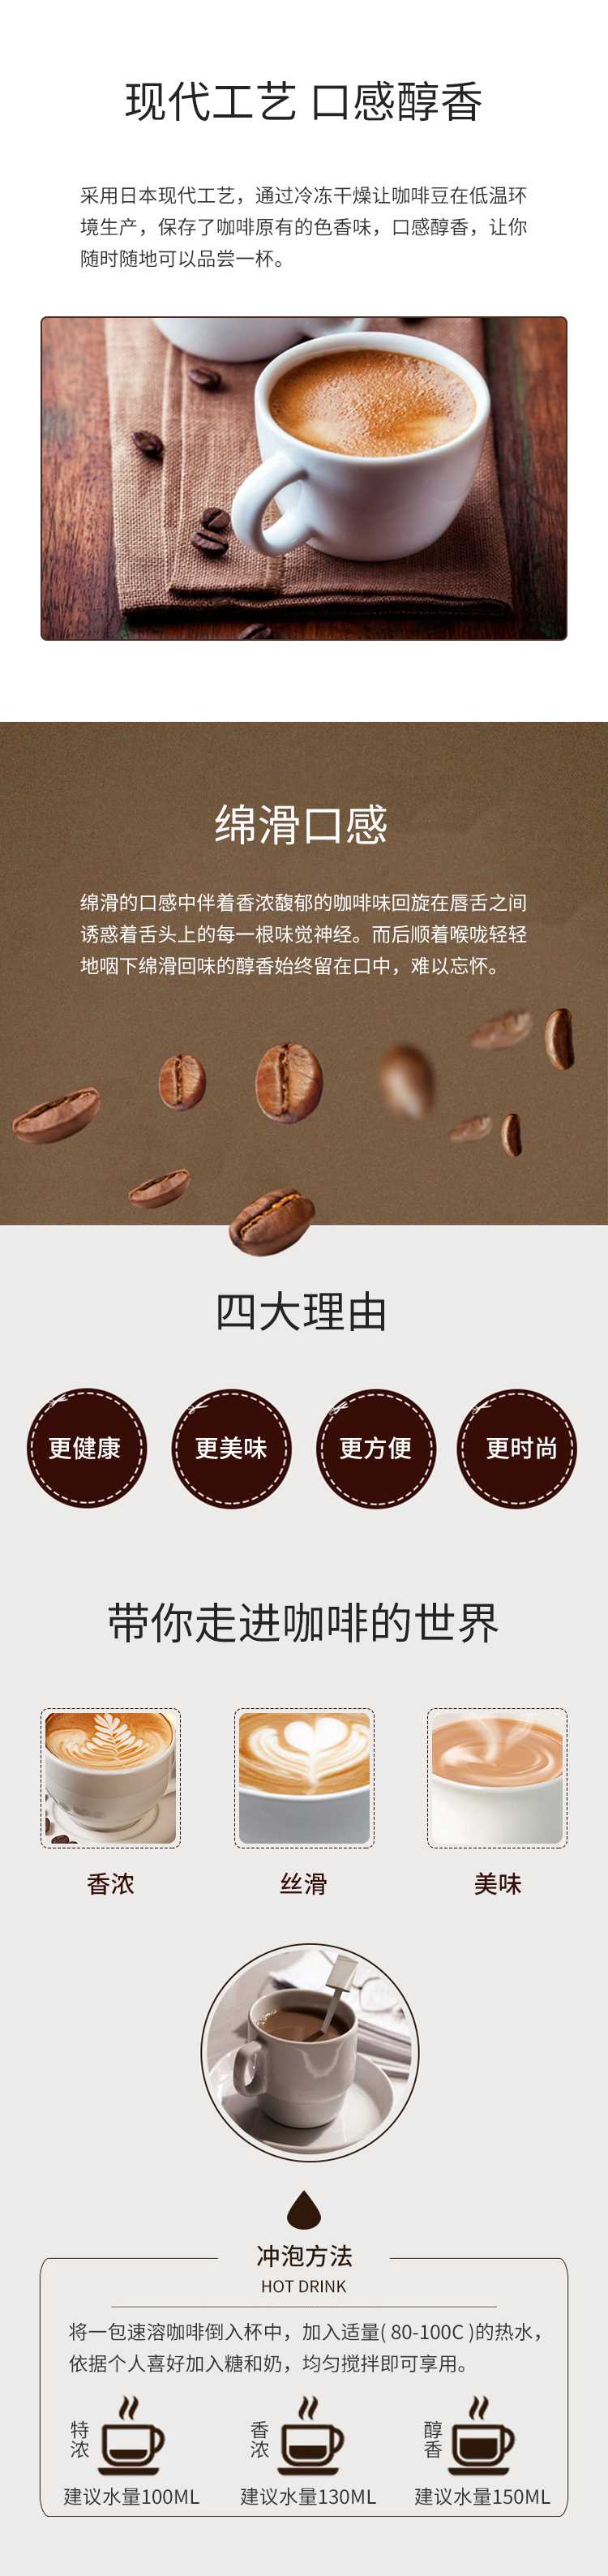 AGF-CAFE-LATORY棒状浓郁榛子拿铁咖啡7包入_02.jpg